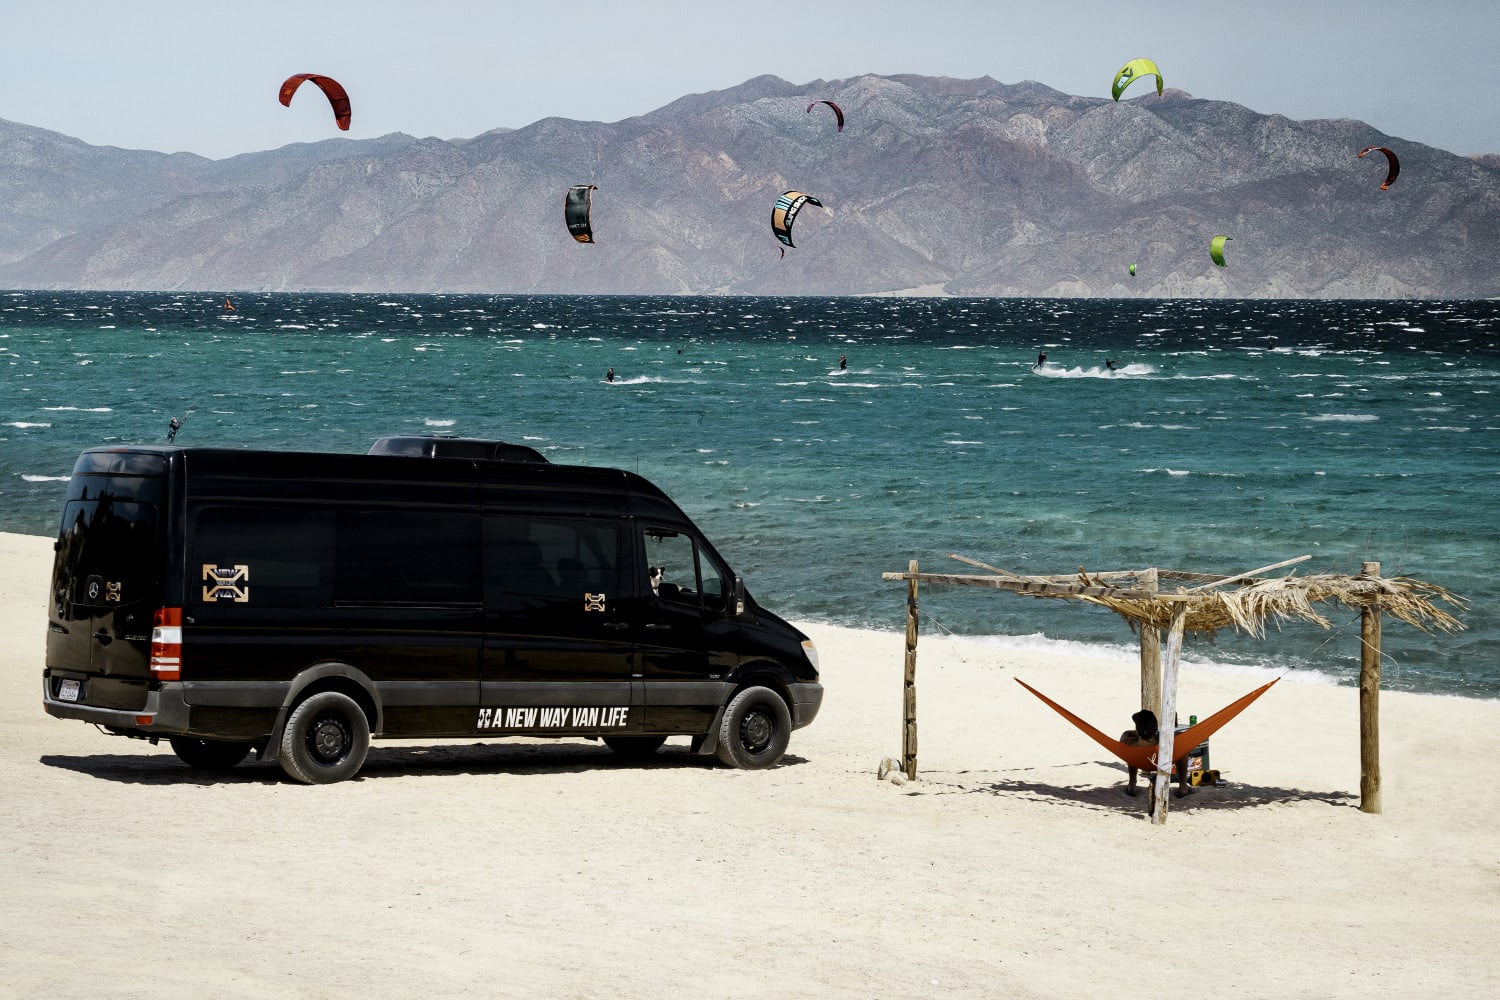 Throwback to Kite Surfing in Baja last year!